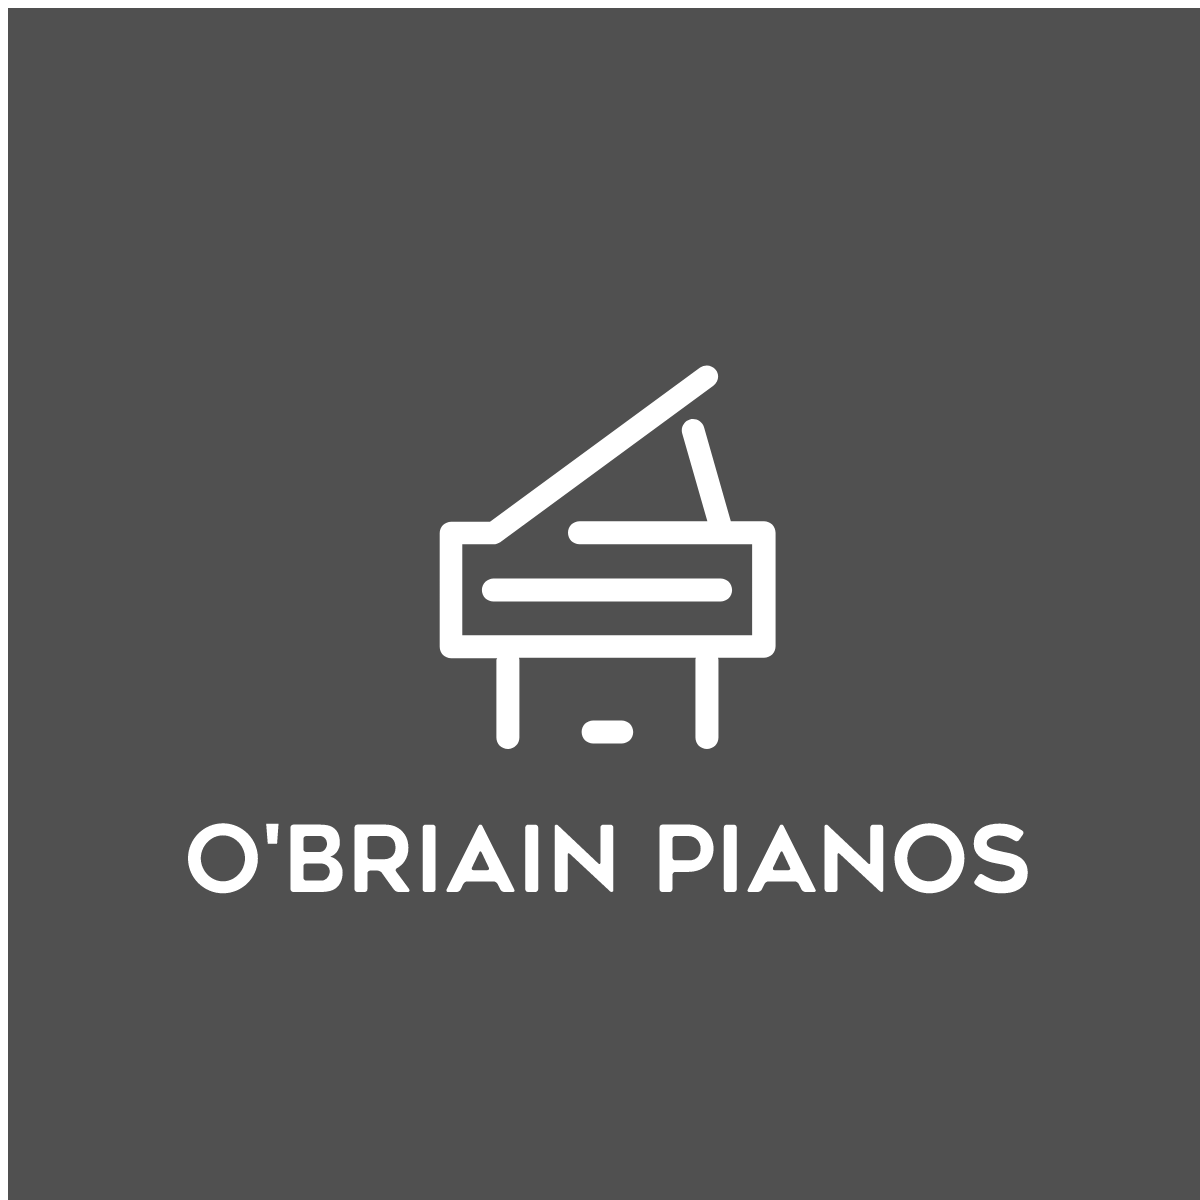 O'Briain Pianos - Yamaha Upright Pianos | Kawai - Hailun - Steinway - Bechstein - Bluthner-O'Briain Pianos